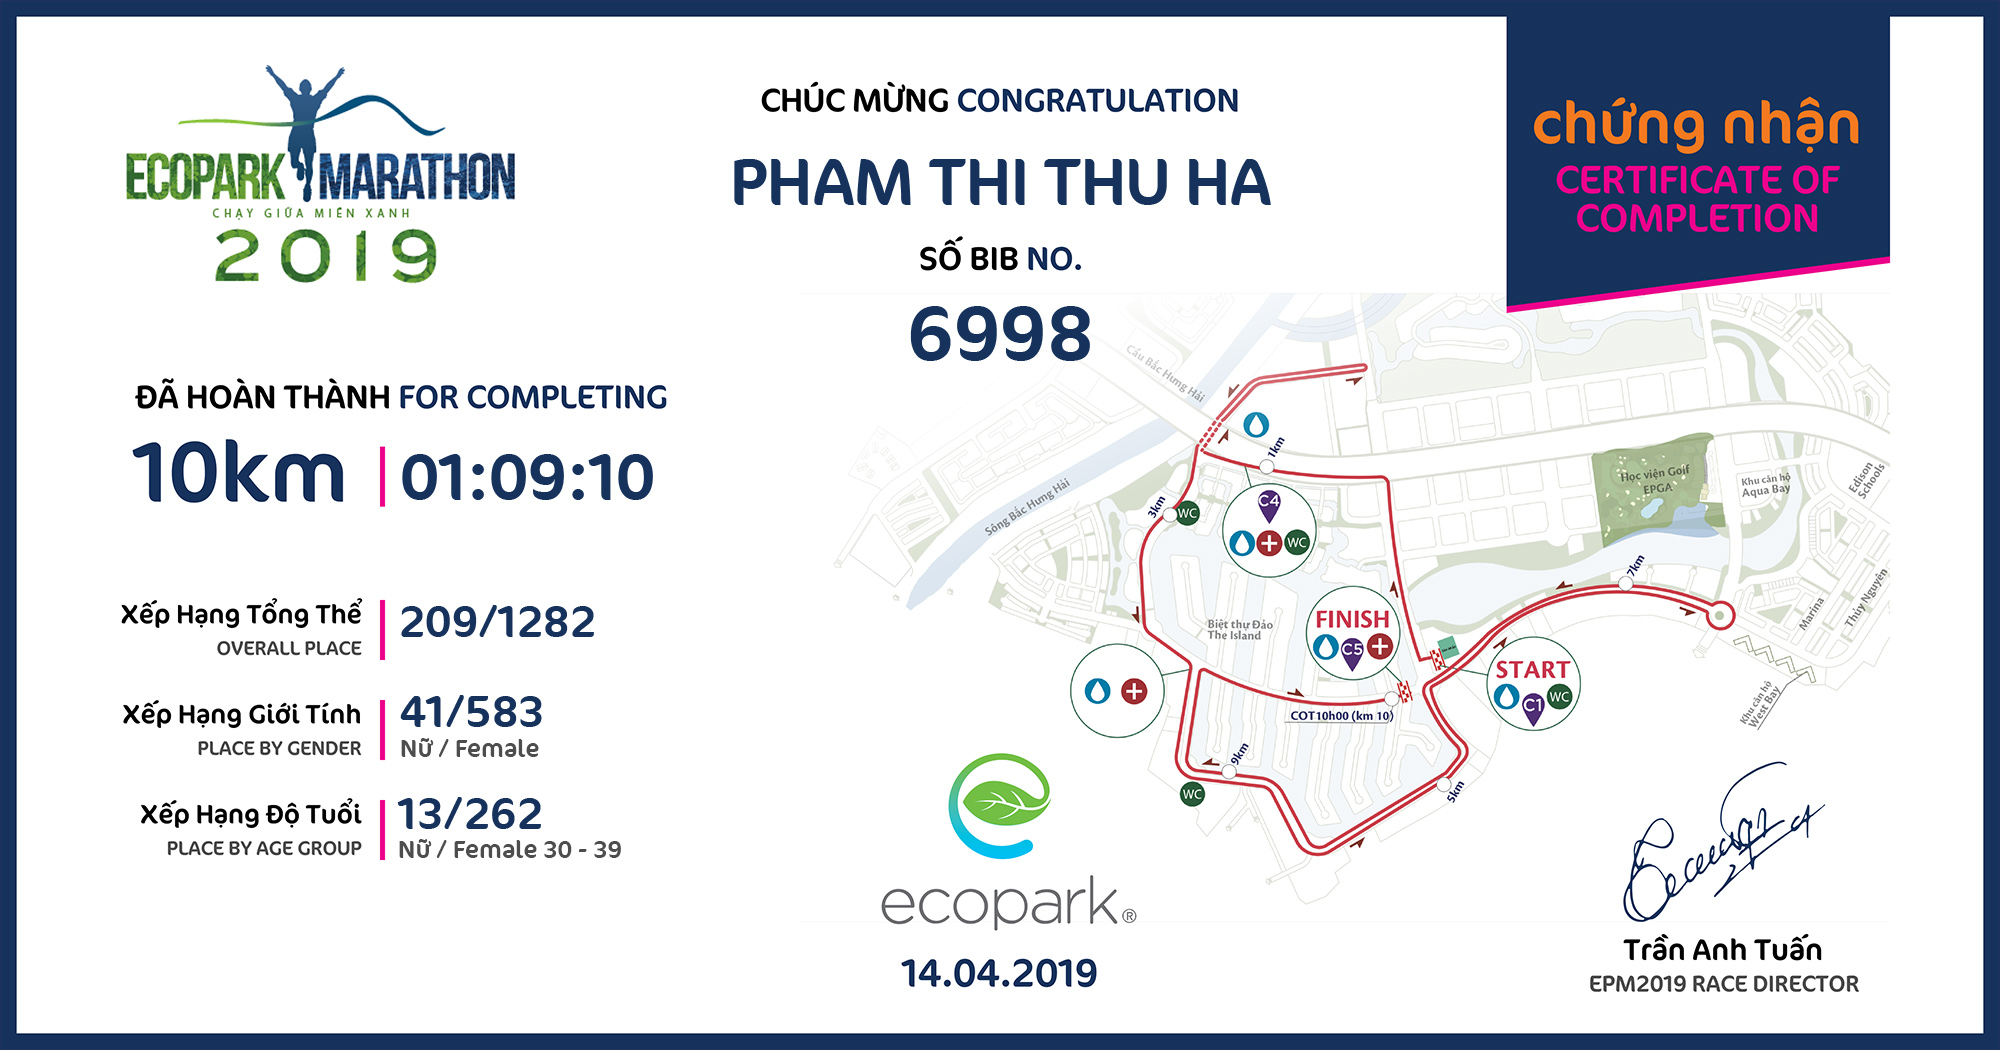 6998 - Pham Thi Thu Ha